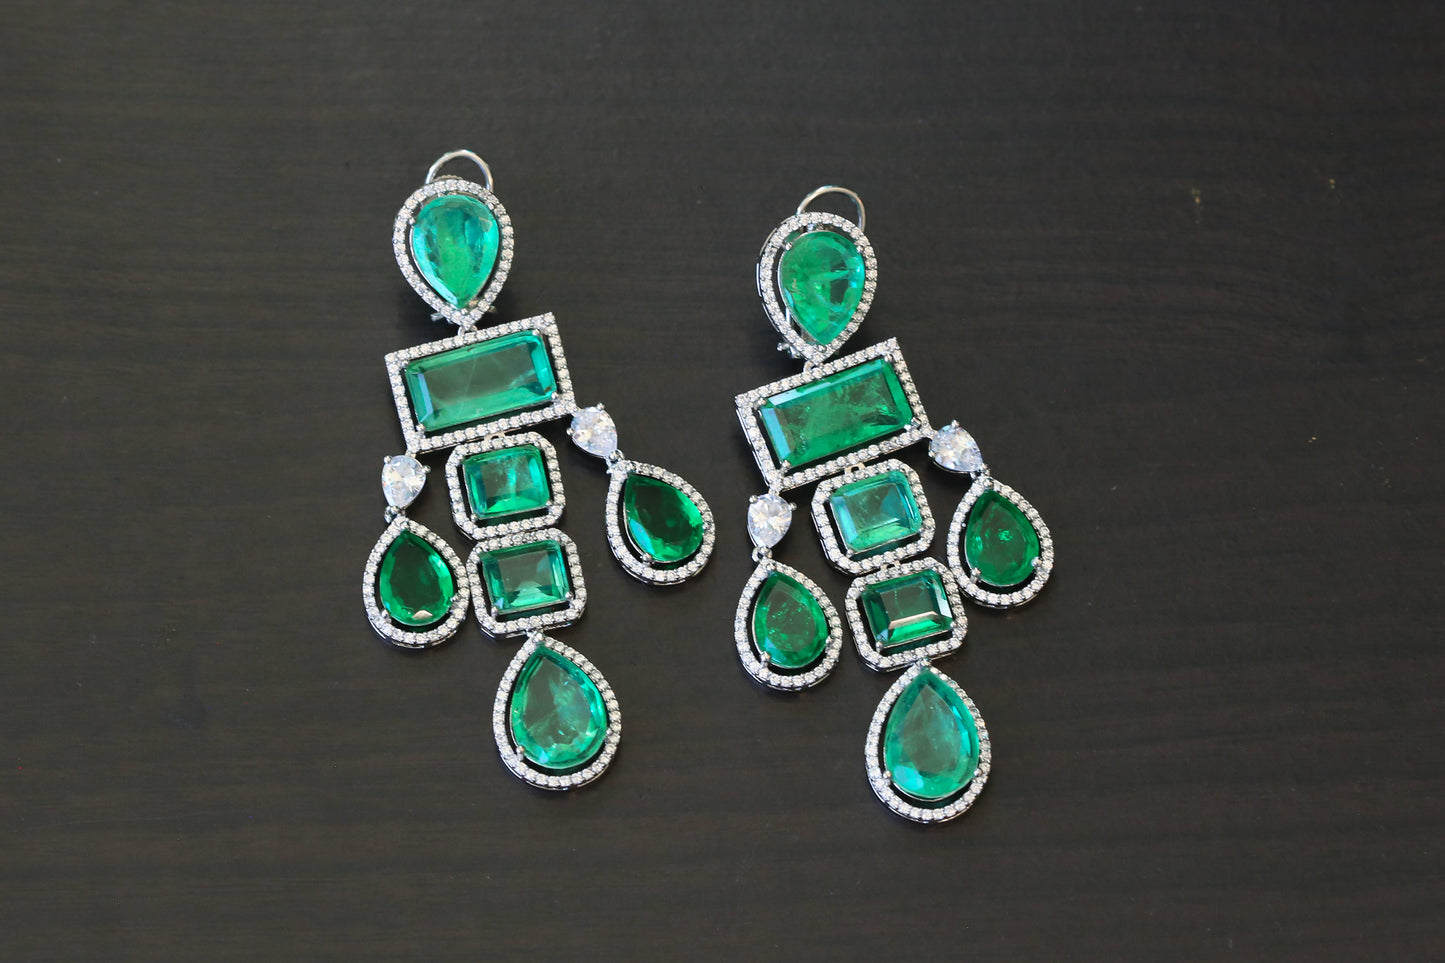 Large Premium Doublet Earrings - Emerald